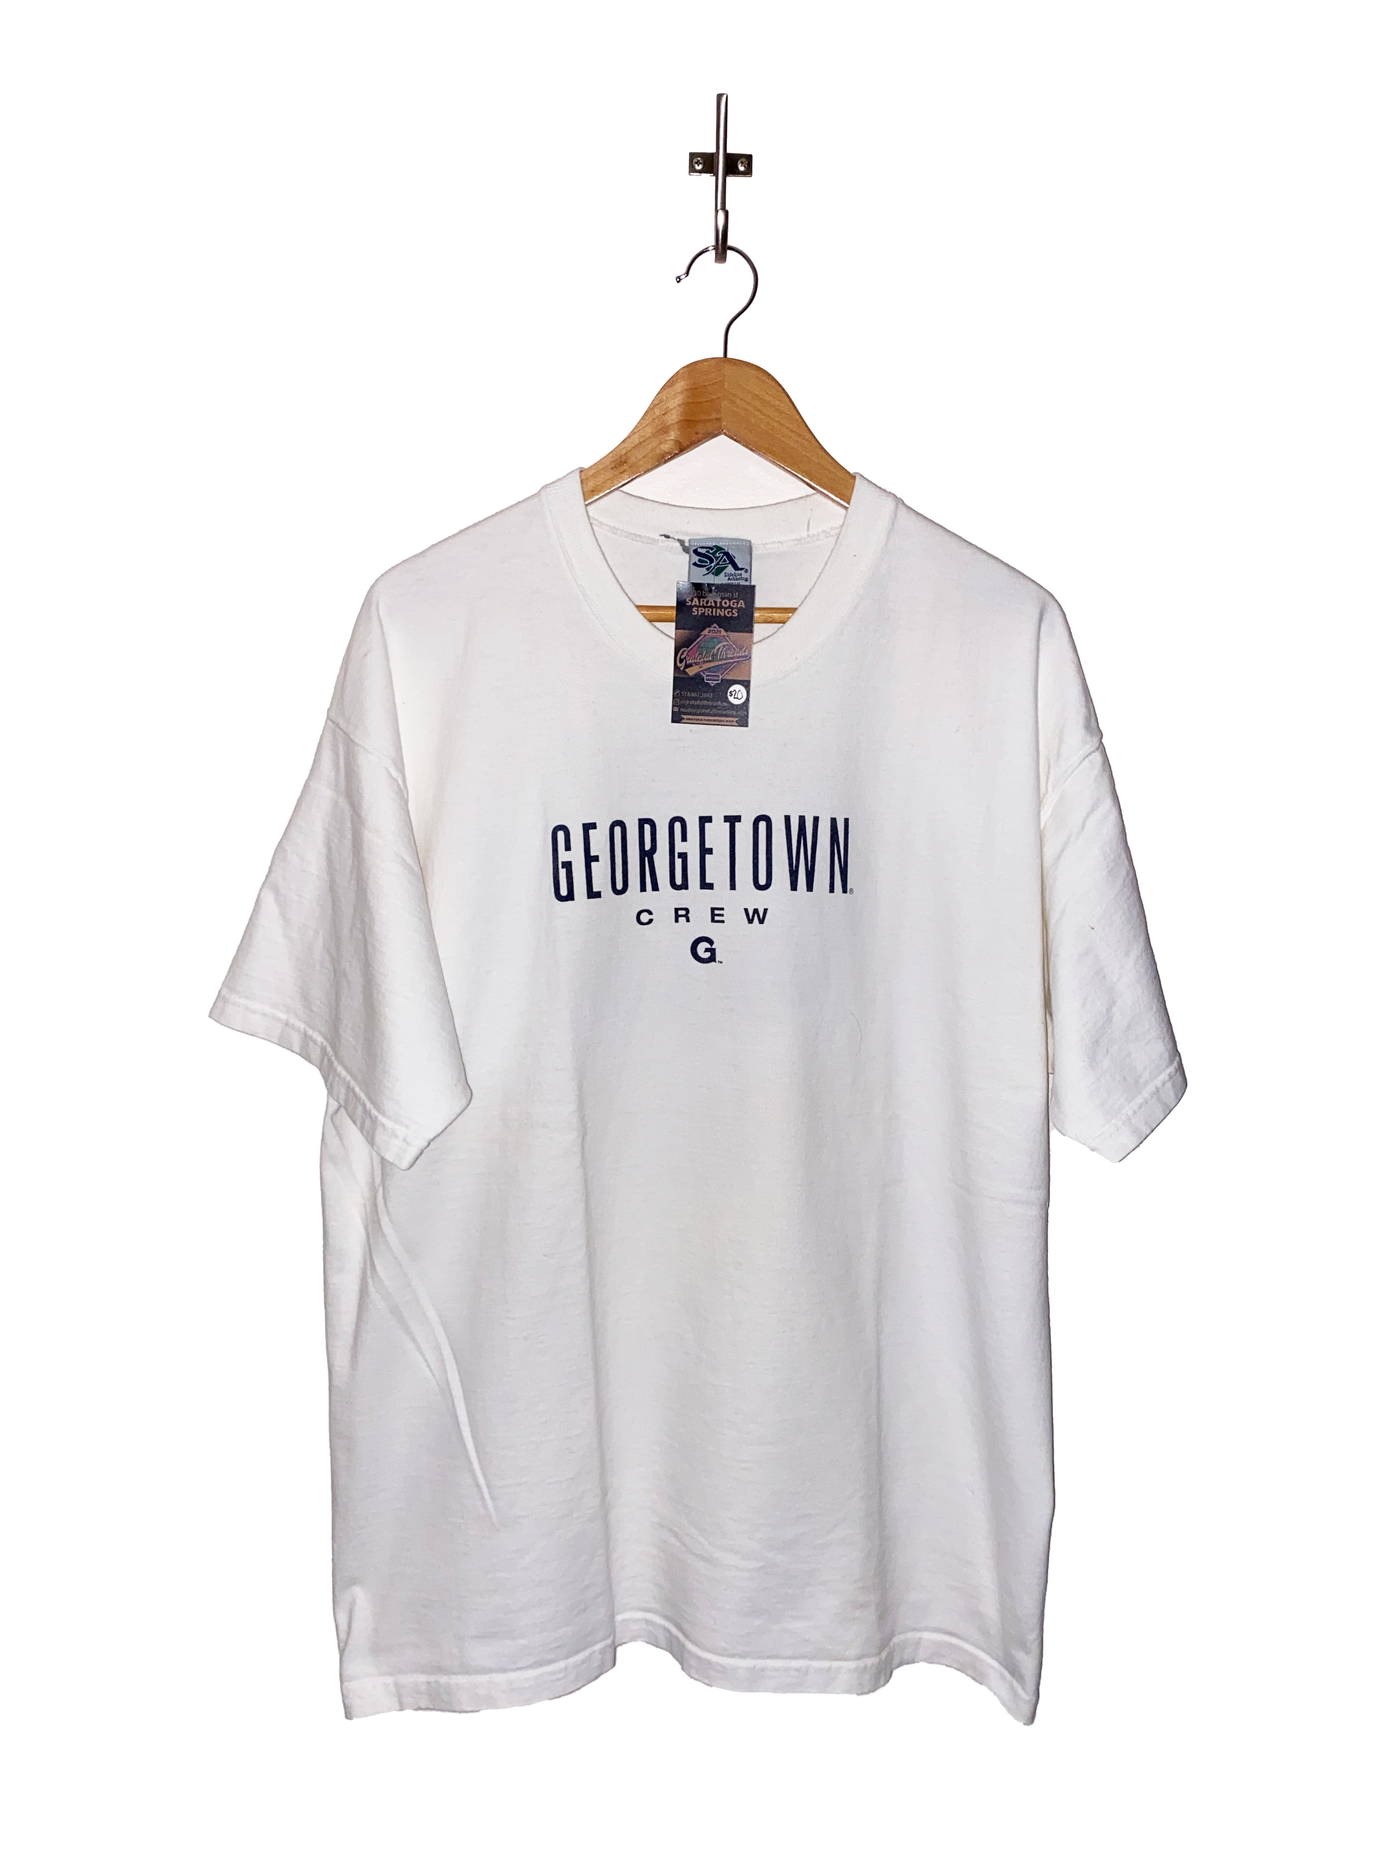 Vintage Georgetown Crew T-Shirt